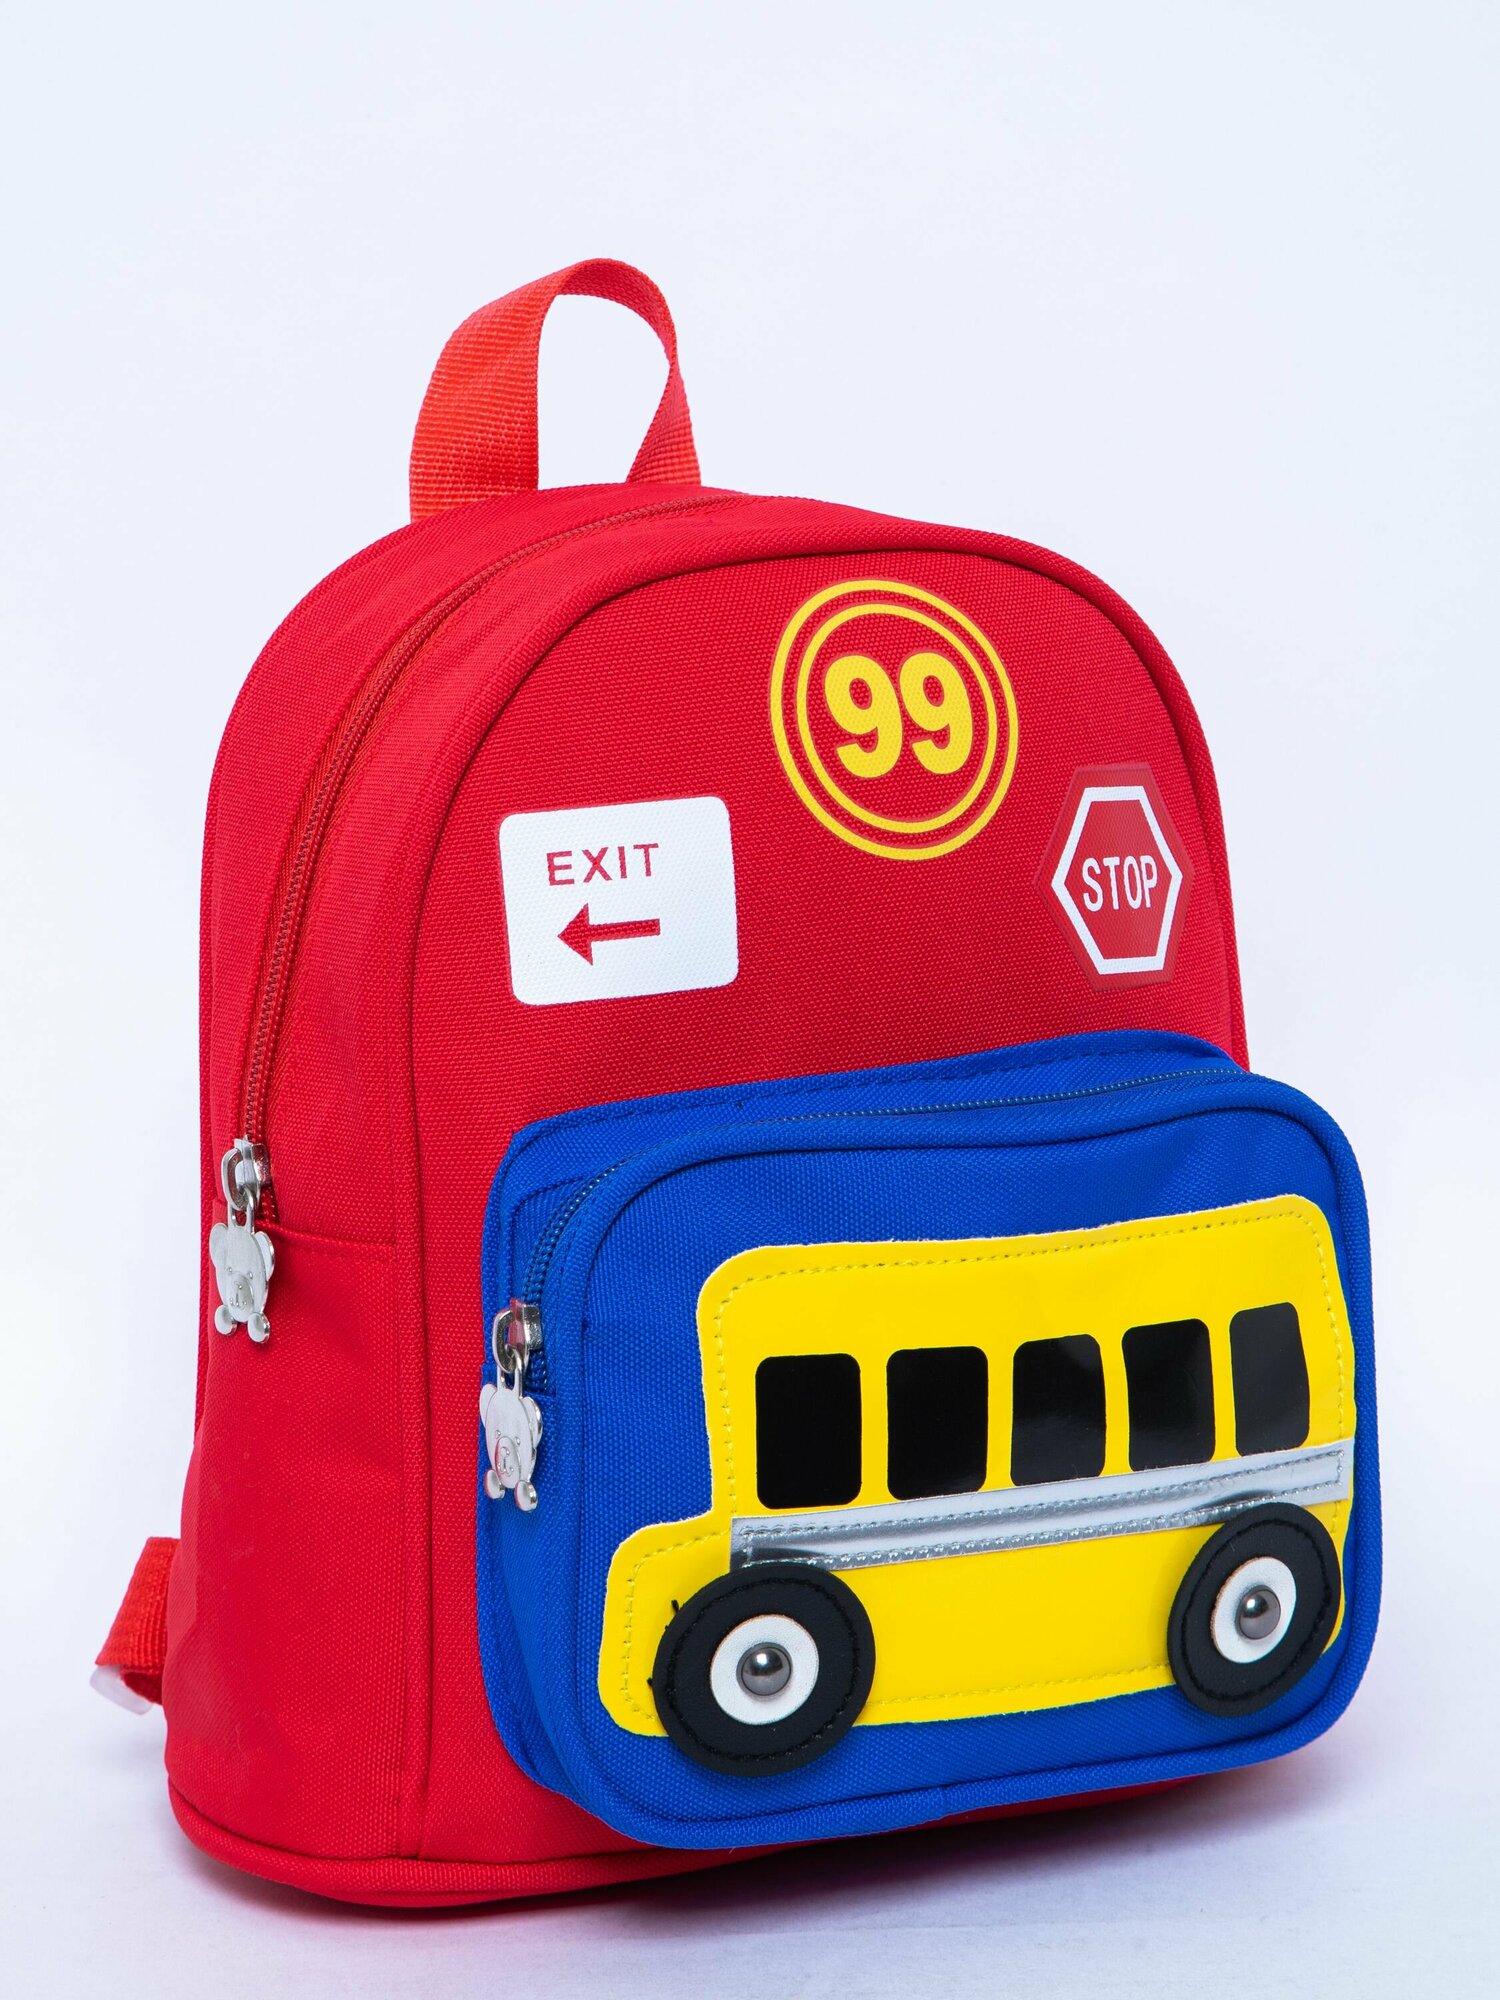 Рюкзак детский, рюкзак для детей, рюкзак для мальчик, рюкзак прогулочный, рюкзак повседневный, рюкзак дошкольный, рюкзак для садика. (Красный автобус)